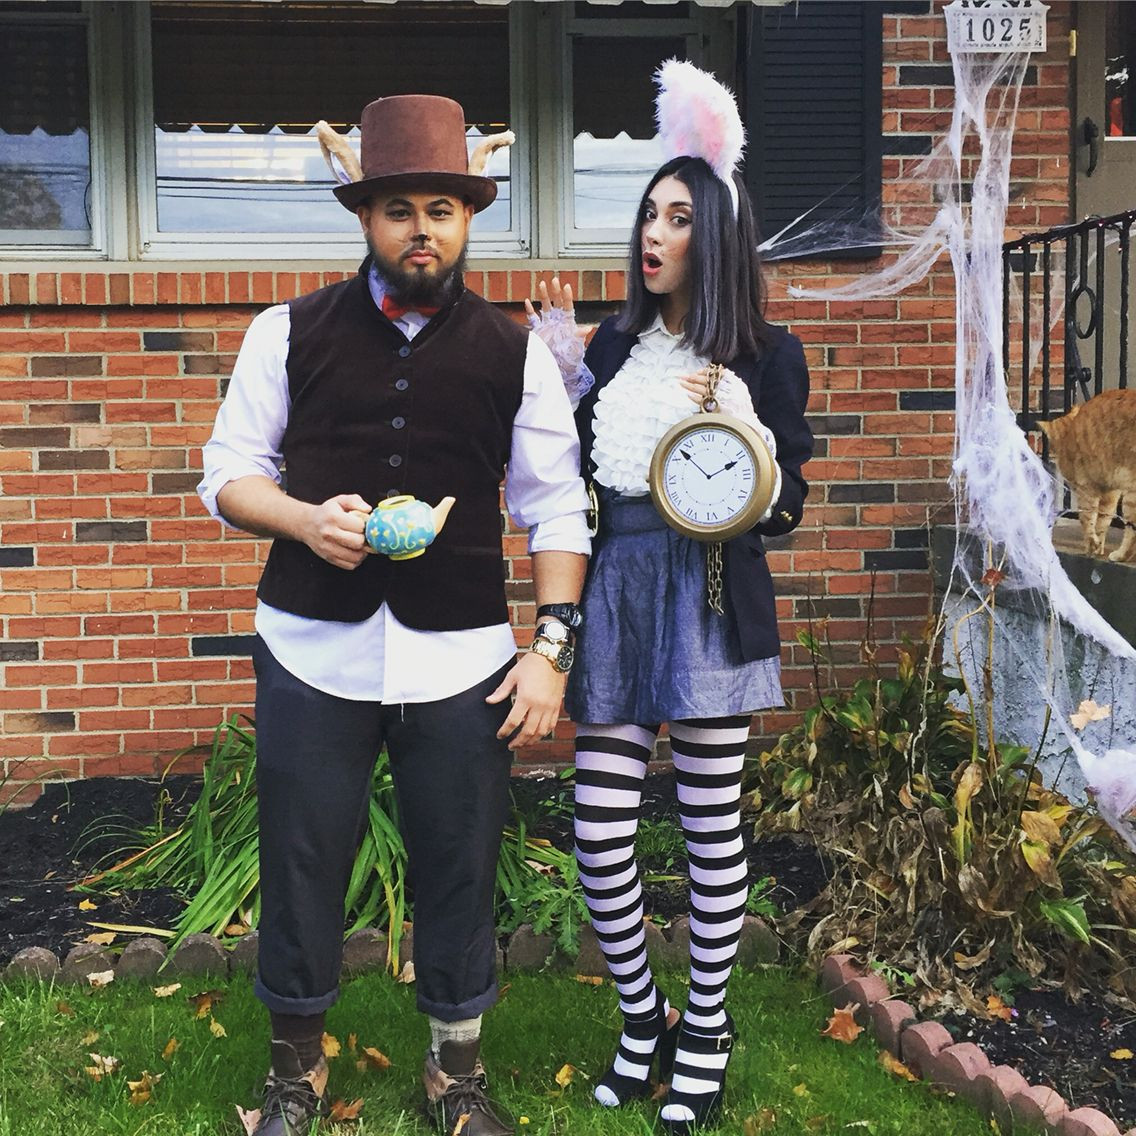 Alice And Wonderland DIY Costume
 DIY March Hare and White Rabbit Alice In Wonderland